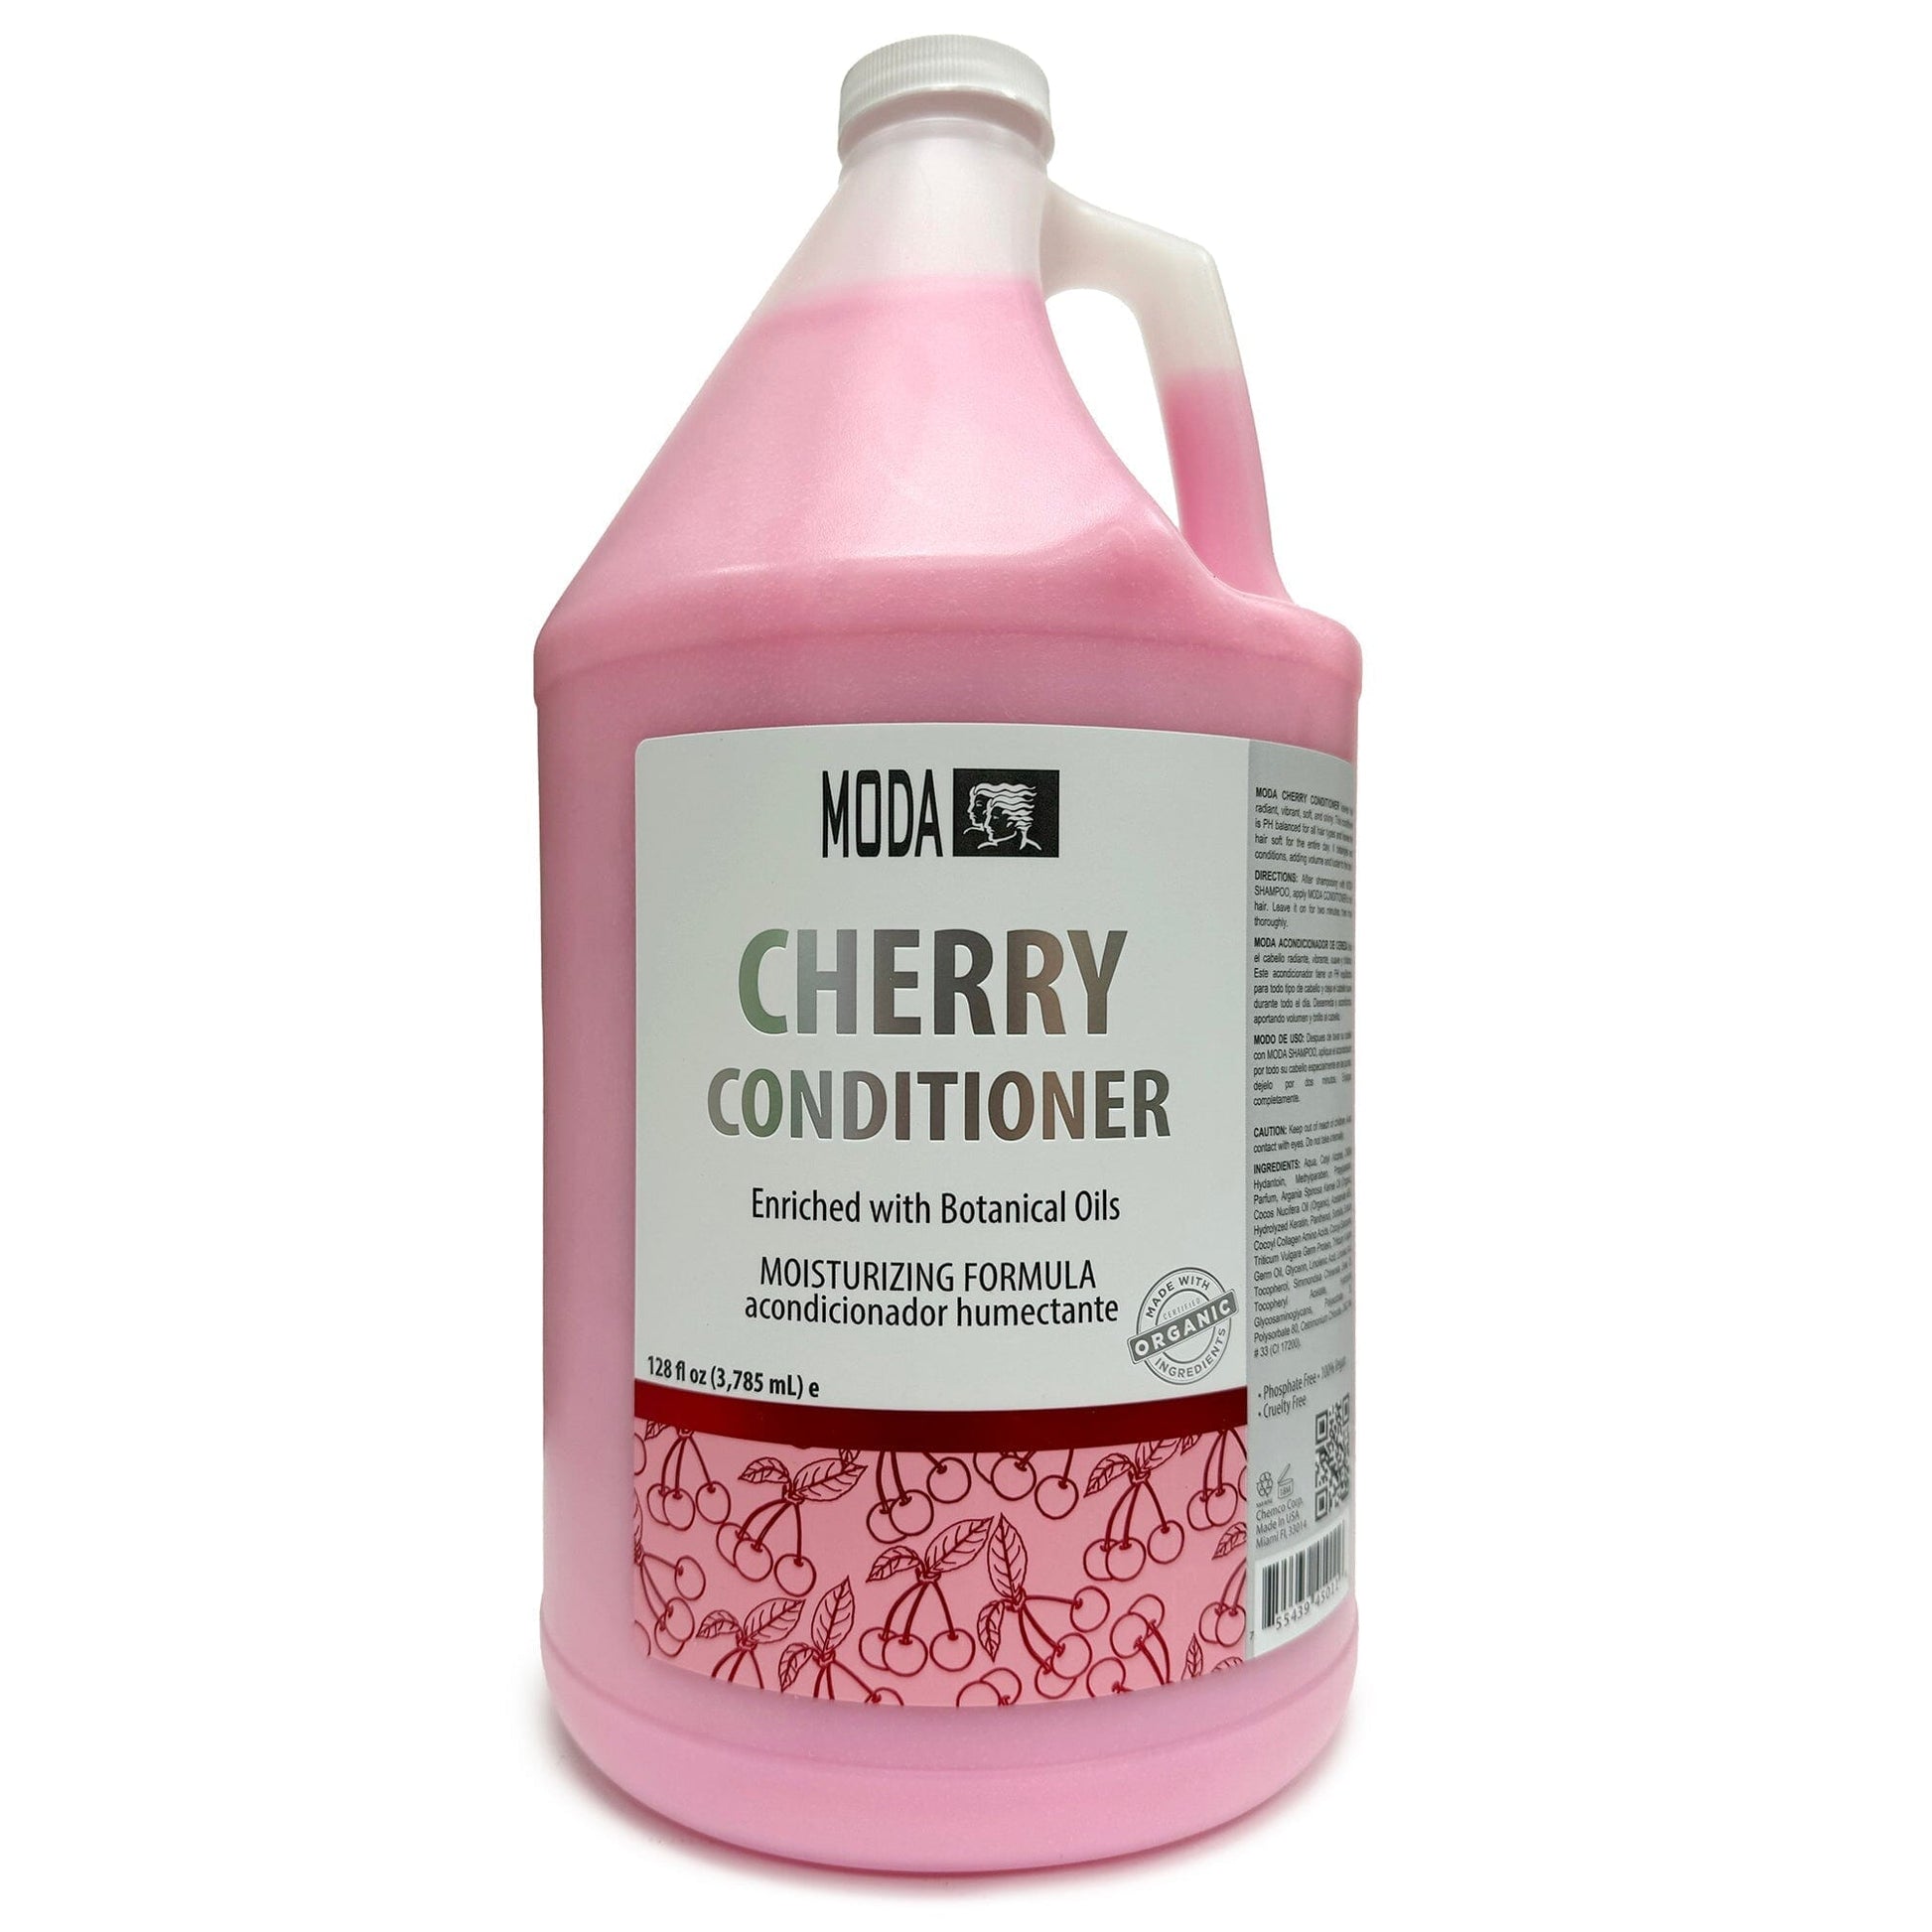 Cherry Conditioner | Enriched with Botanical Oils | 128 fl oz | MODA CONDITIONER MODA 